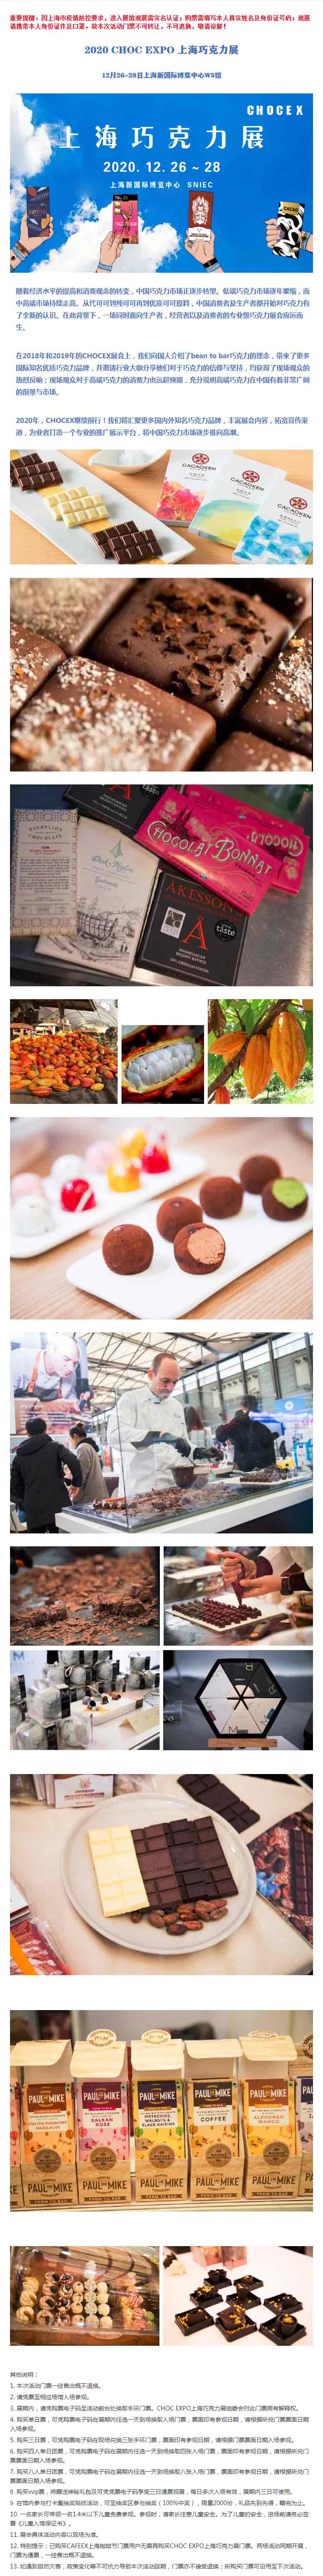 2020-CHOC-EXPO-上海巧克力展-预约报名-活动-活动行.jpg